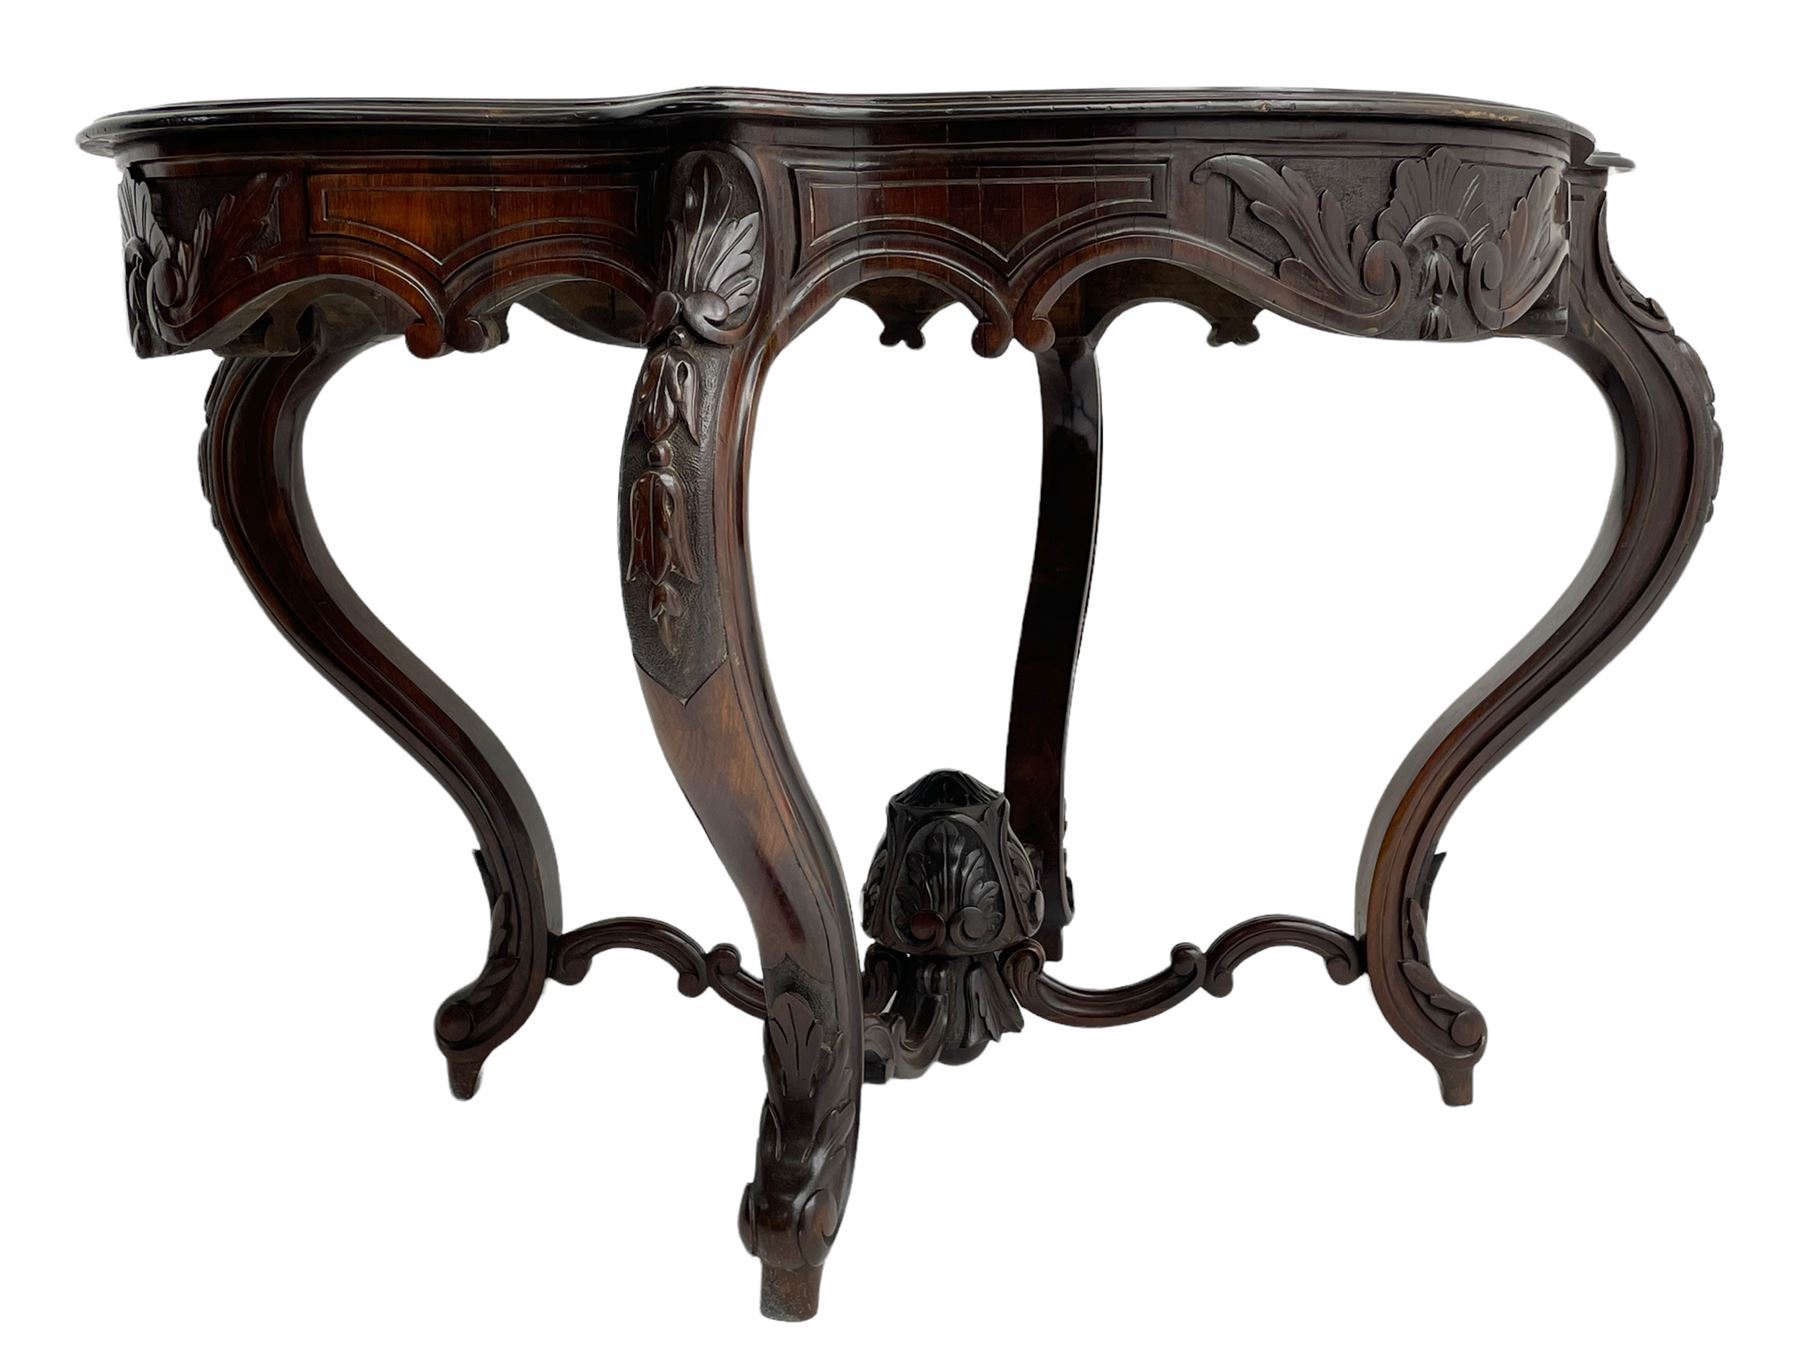 19th century Irish rosewood centre table - Image 7 of 12